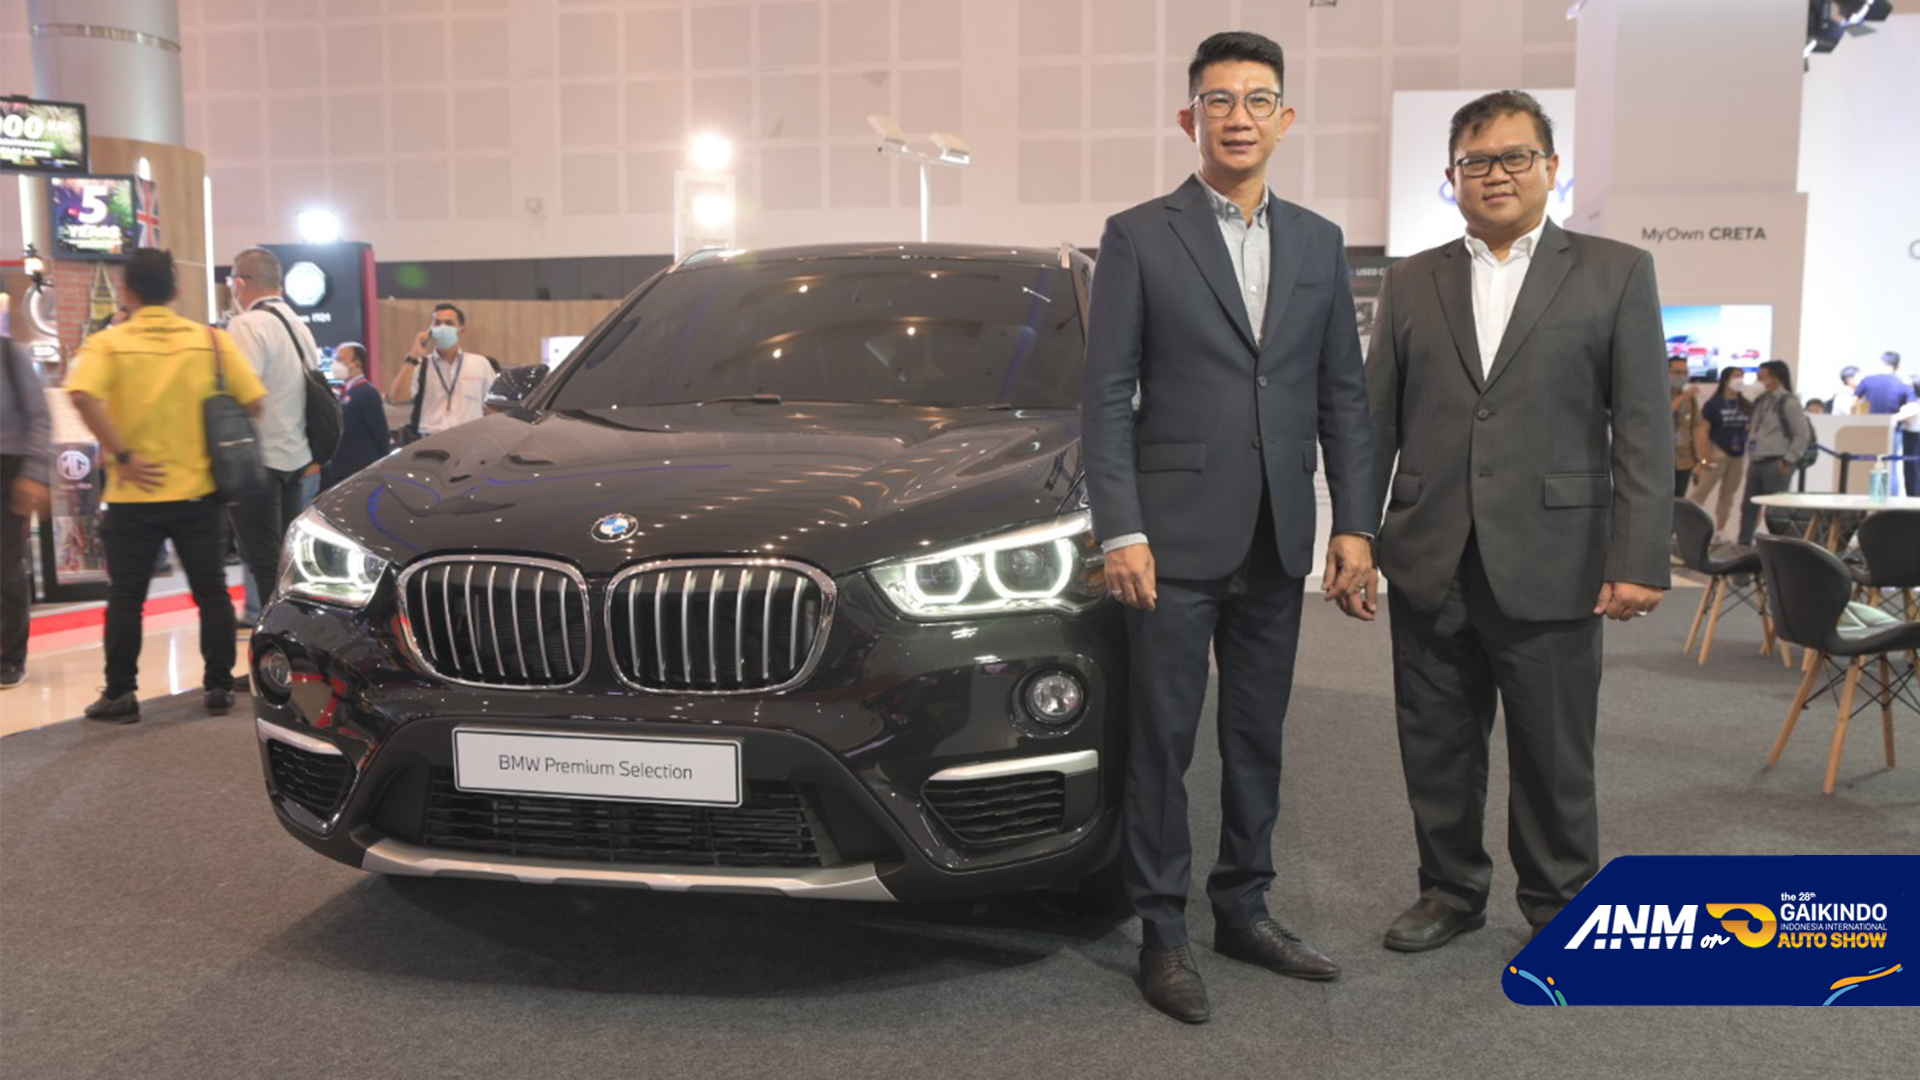 Berita, bmw-giias-surabaya: BMW Berikan Penawaran Spesial di GIIAS Surabaya